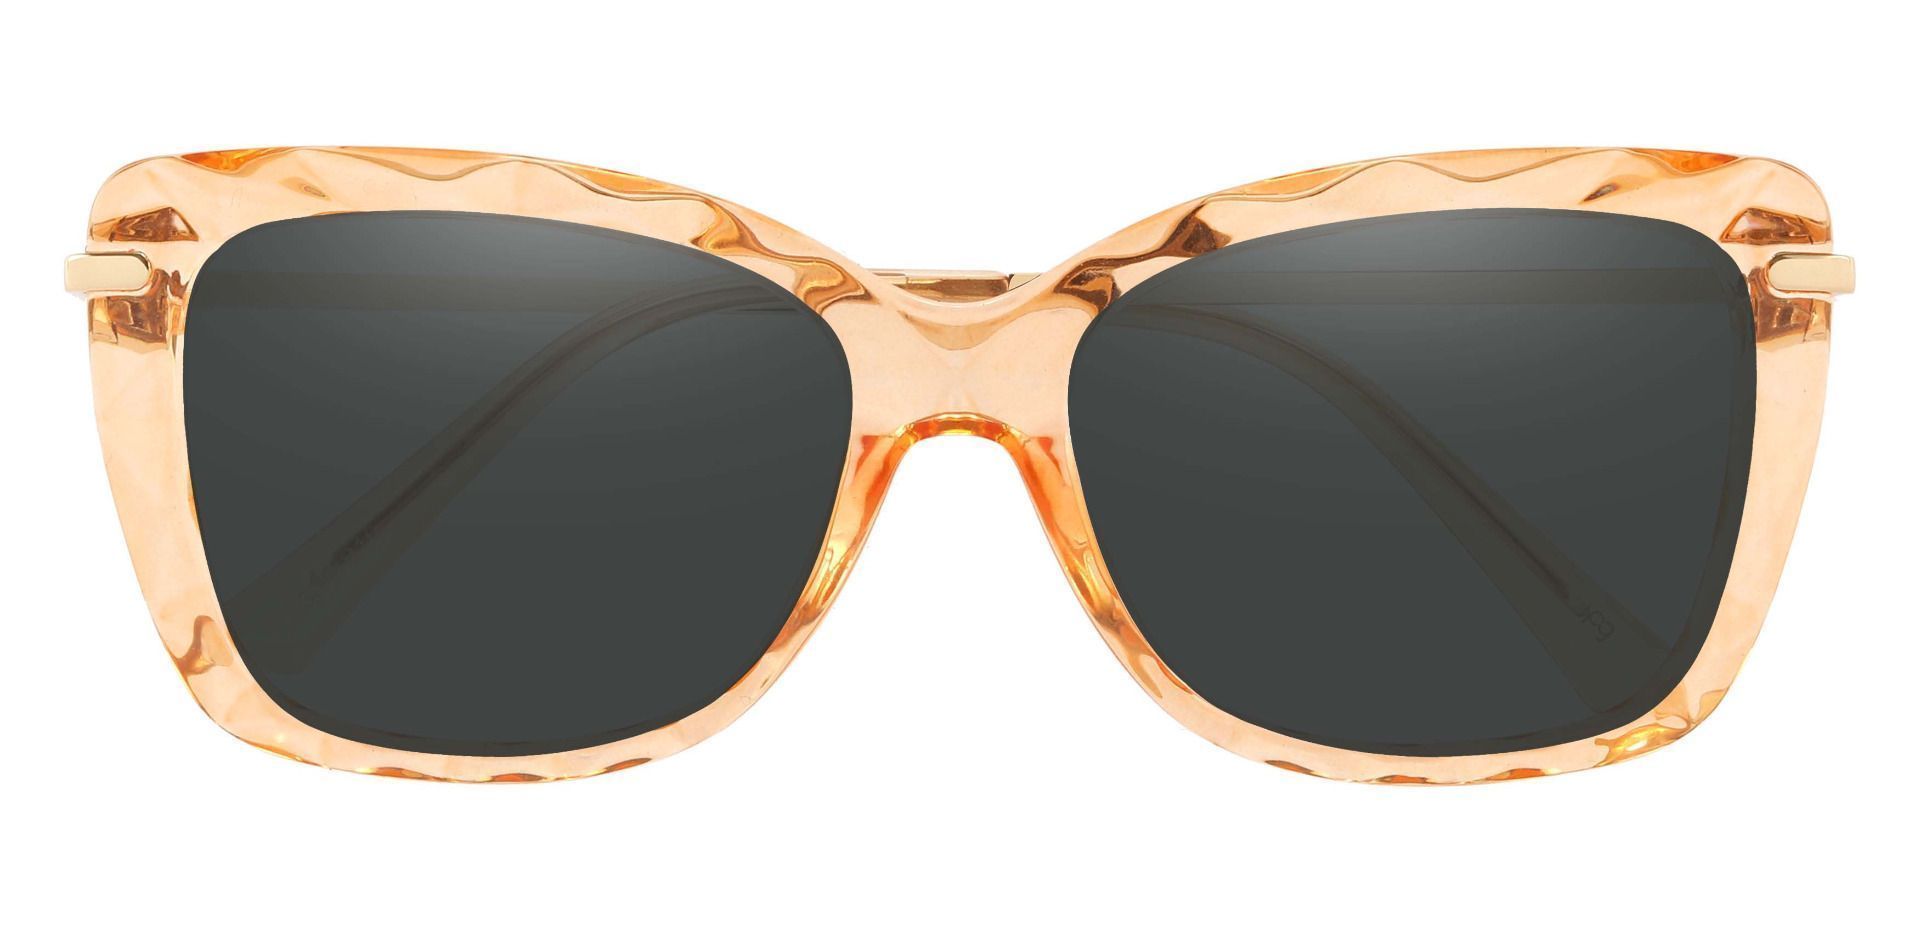 Shoshanna Rectangle Progressive Sunglasses - Brown Frame With Gray Lenses